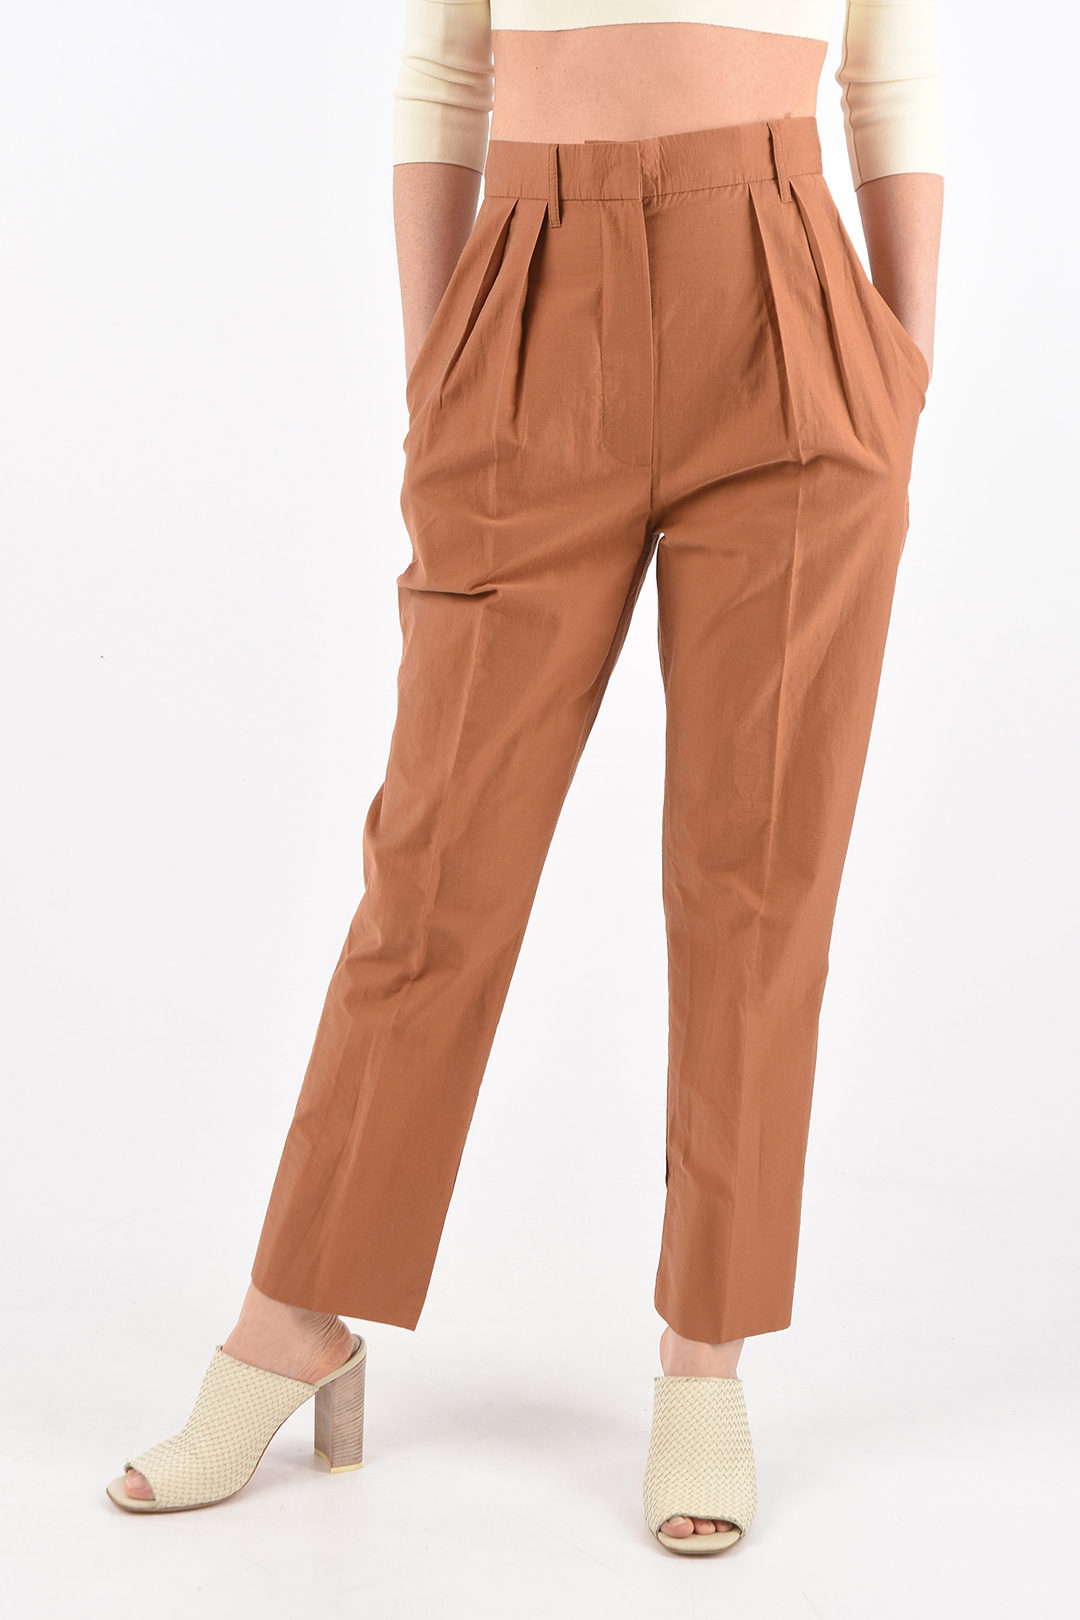 https://data.glamood.com/imgprodotto/high-rise-waist-reya-double-pleat-trousers_1135176_zoom.jpg